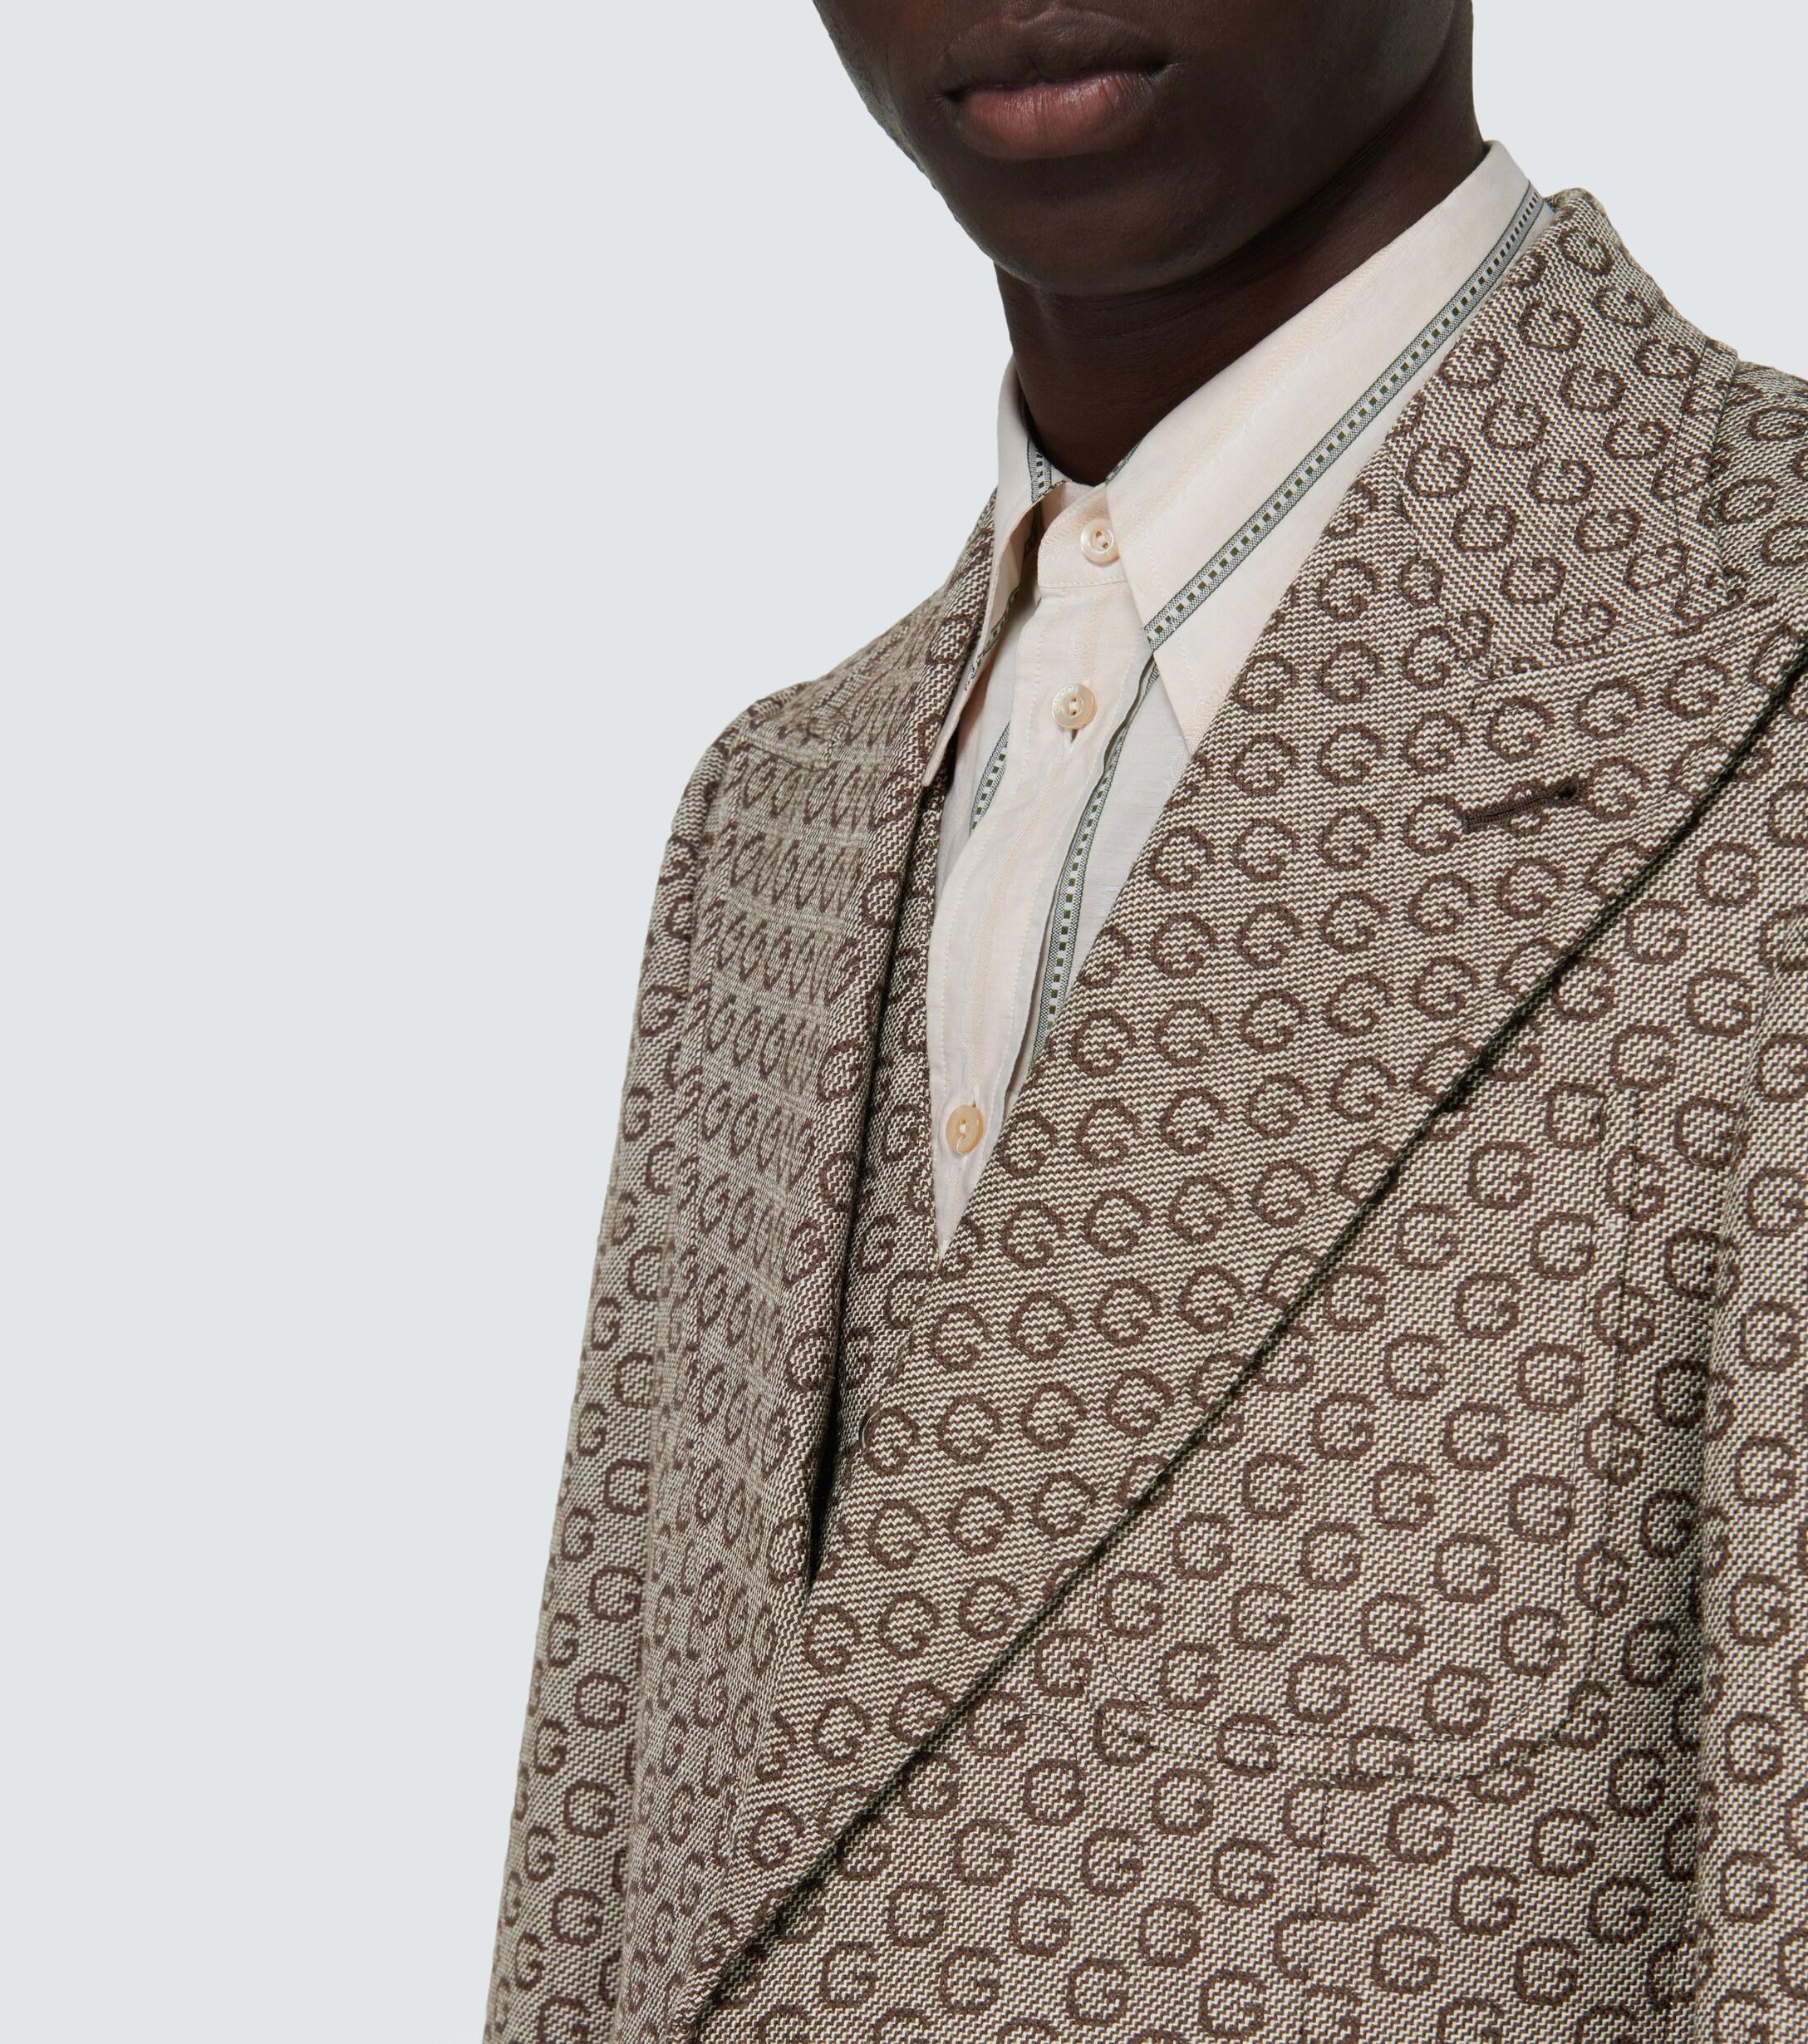 Gucci Monogrammed Wool Blazer in Brown for Men - Lyst